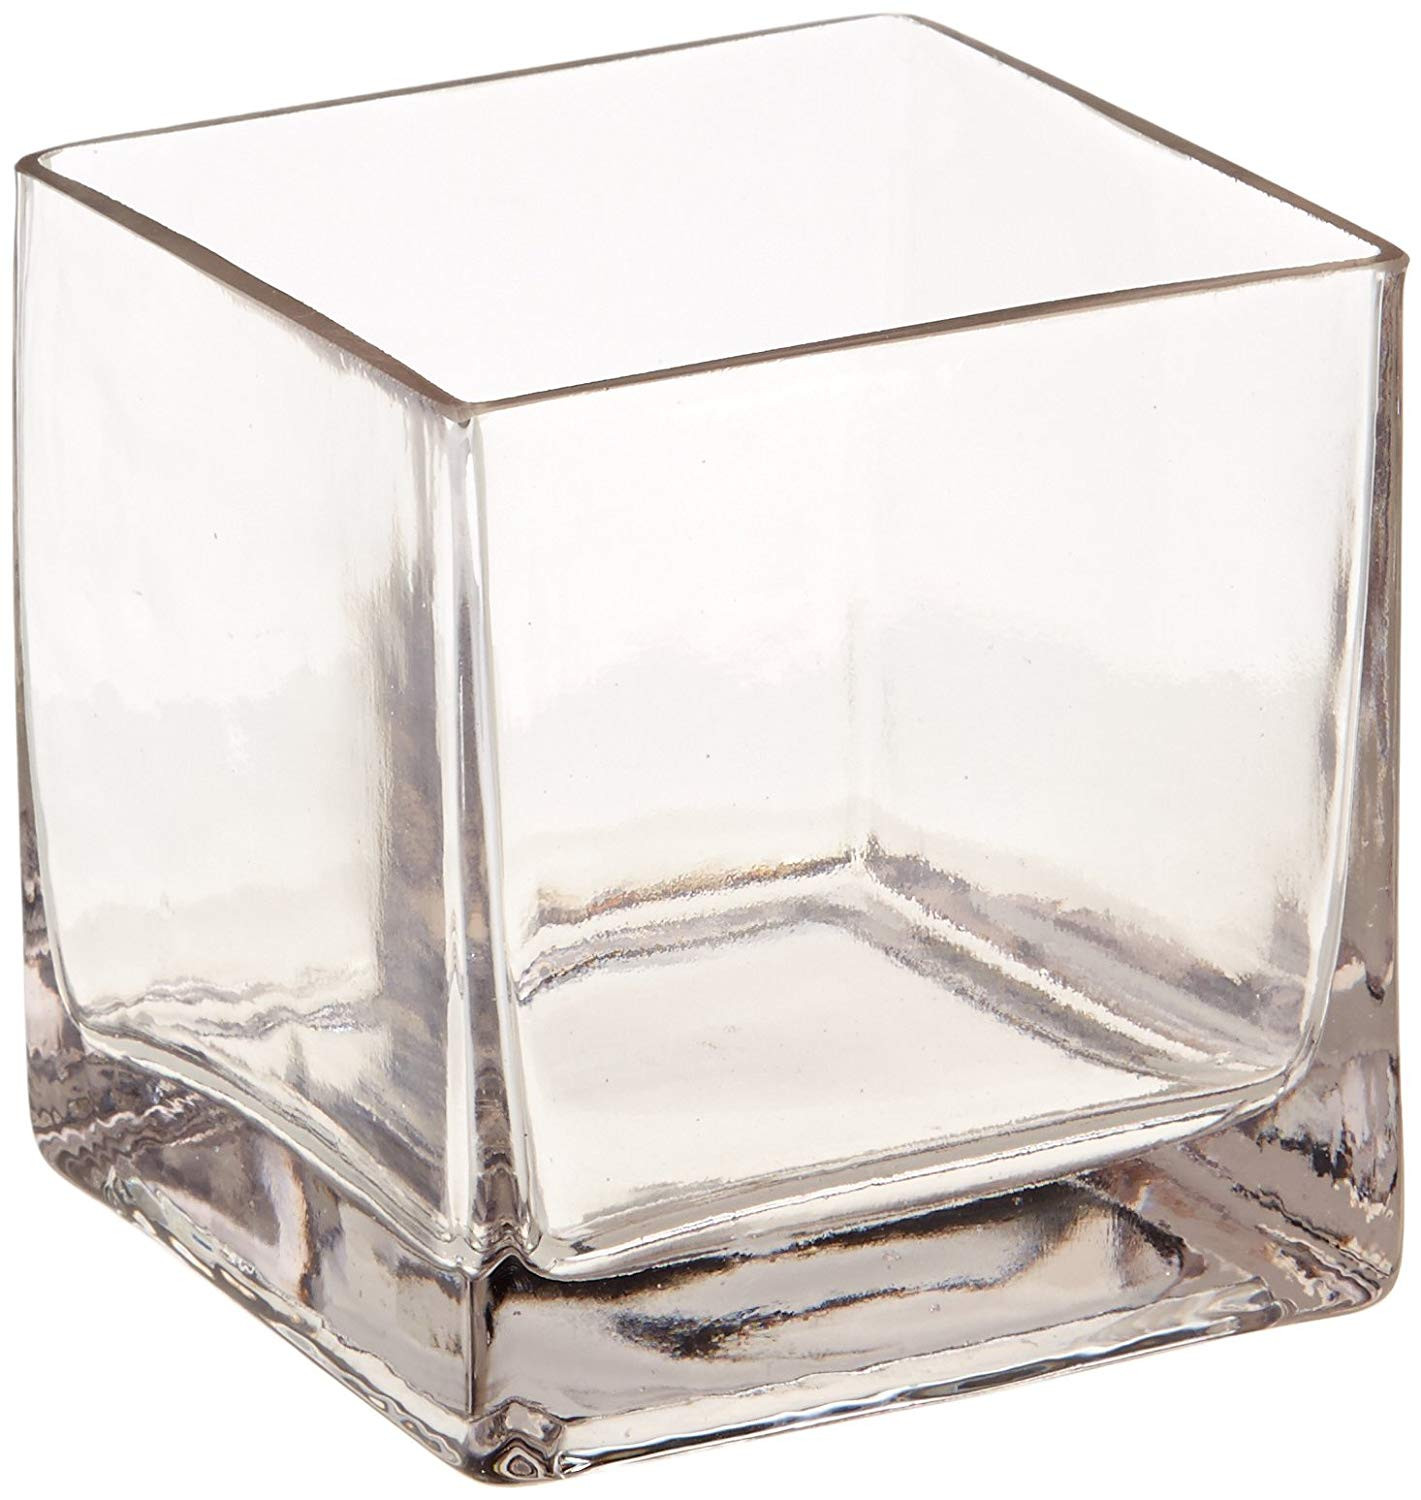 30 Trendy ashland Cube Glass Vase 2022 free download ashland cube glass vase of amazon com 12piece 4 square crystal clear glass vase home kitchen regarding 71 jezfmvnl sl1500